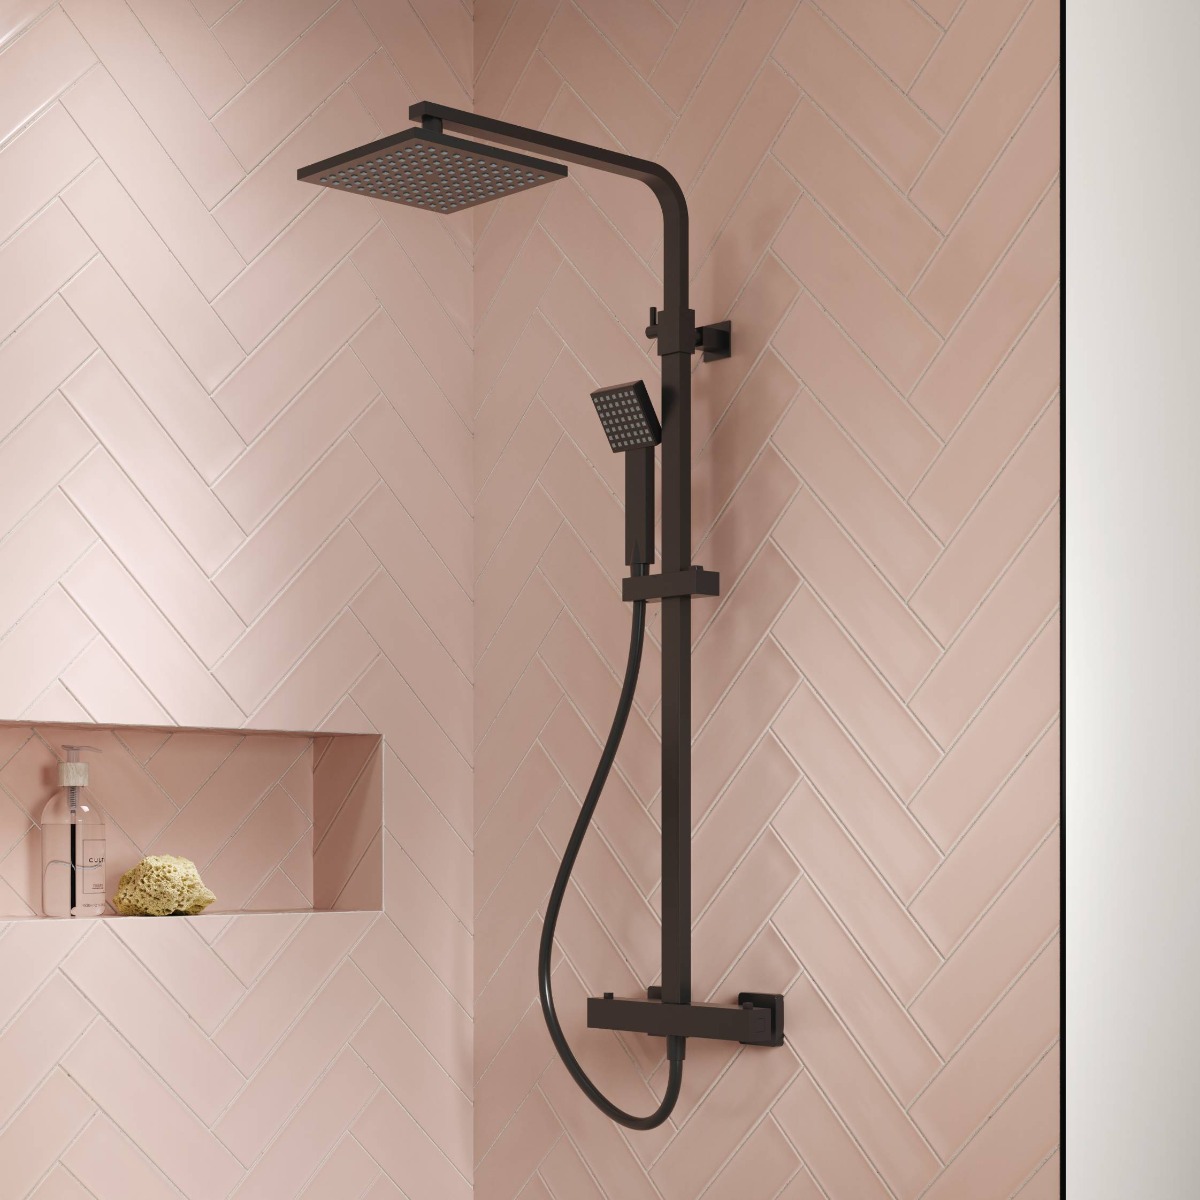 pink tiles in bathroom with matte black shower